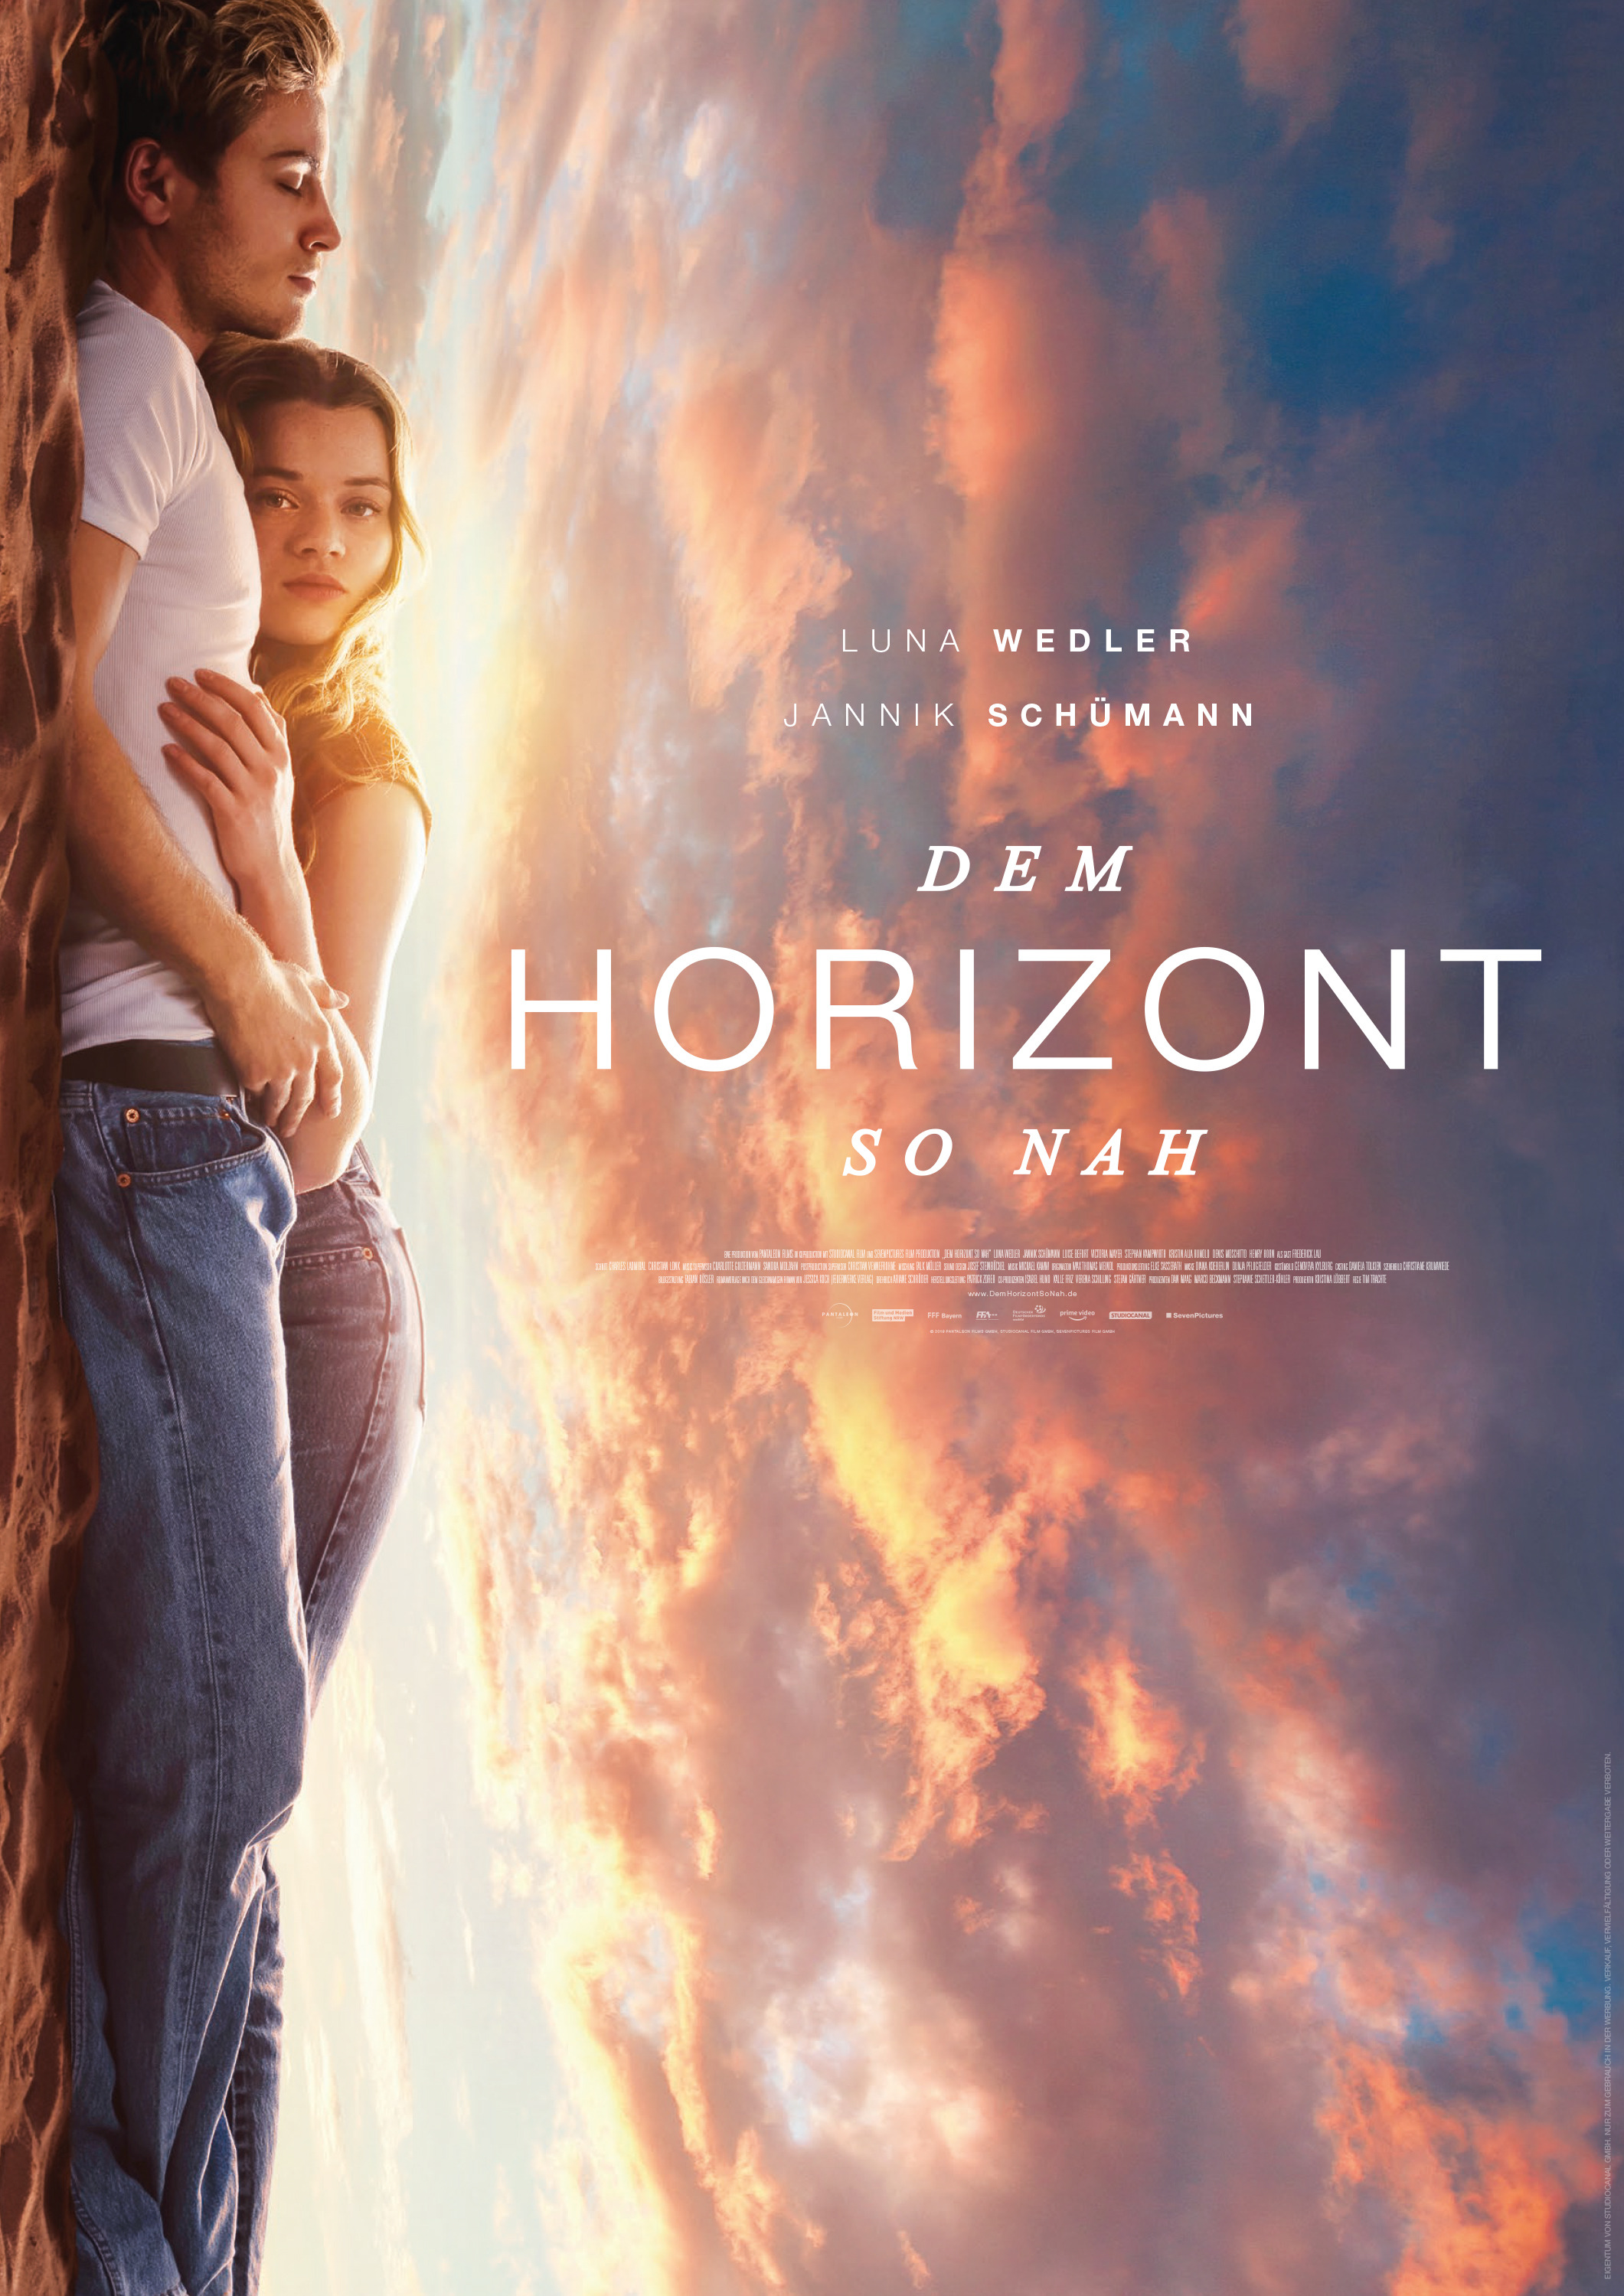 Mega Sized Movie Poster Image for Dem Horizont so nah (#4 of 4)